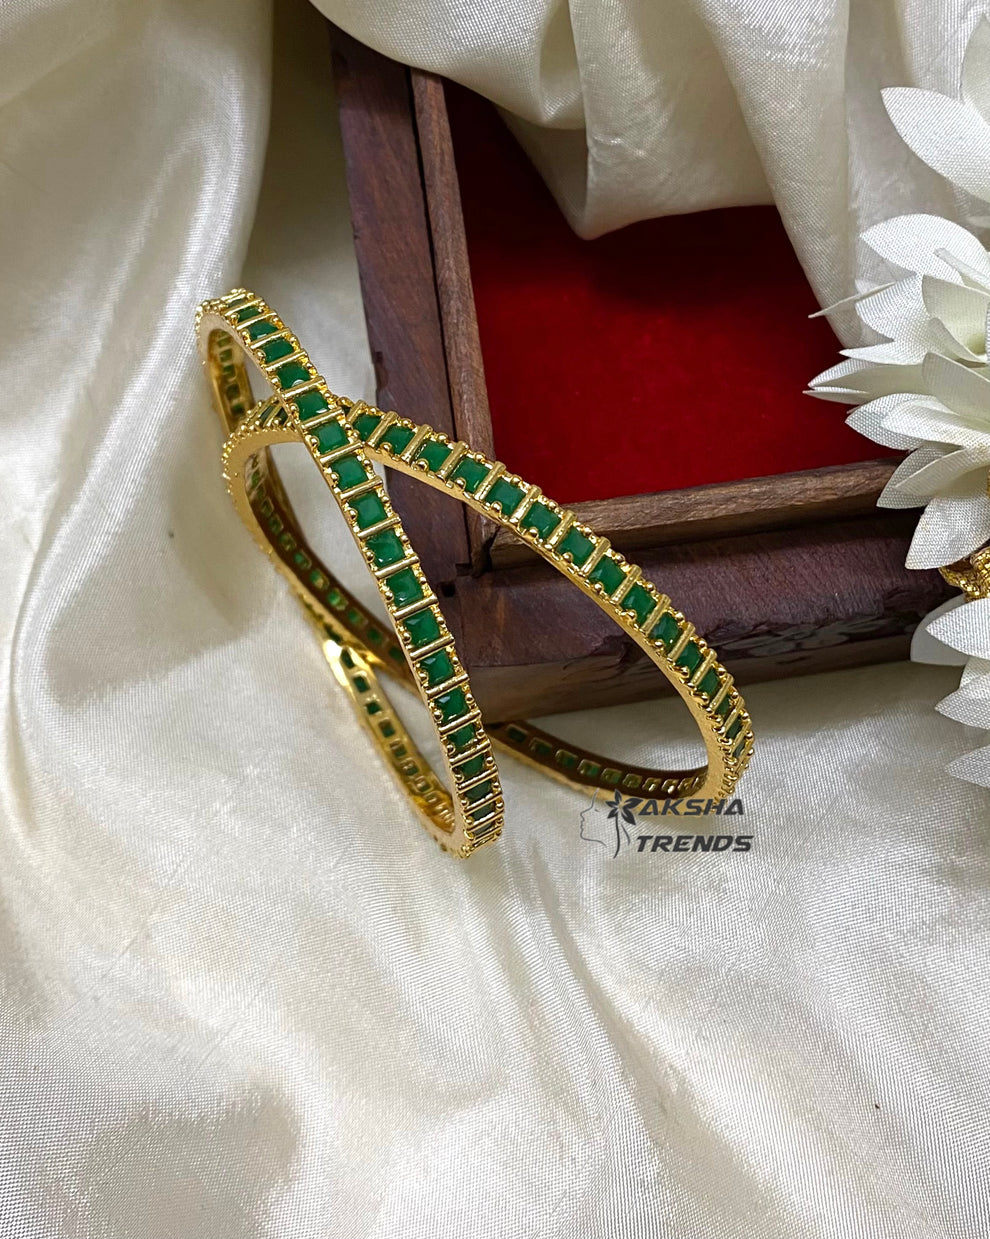 Premium block stone bangles (2pc) -Green Aksha Trends 